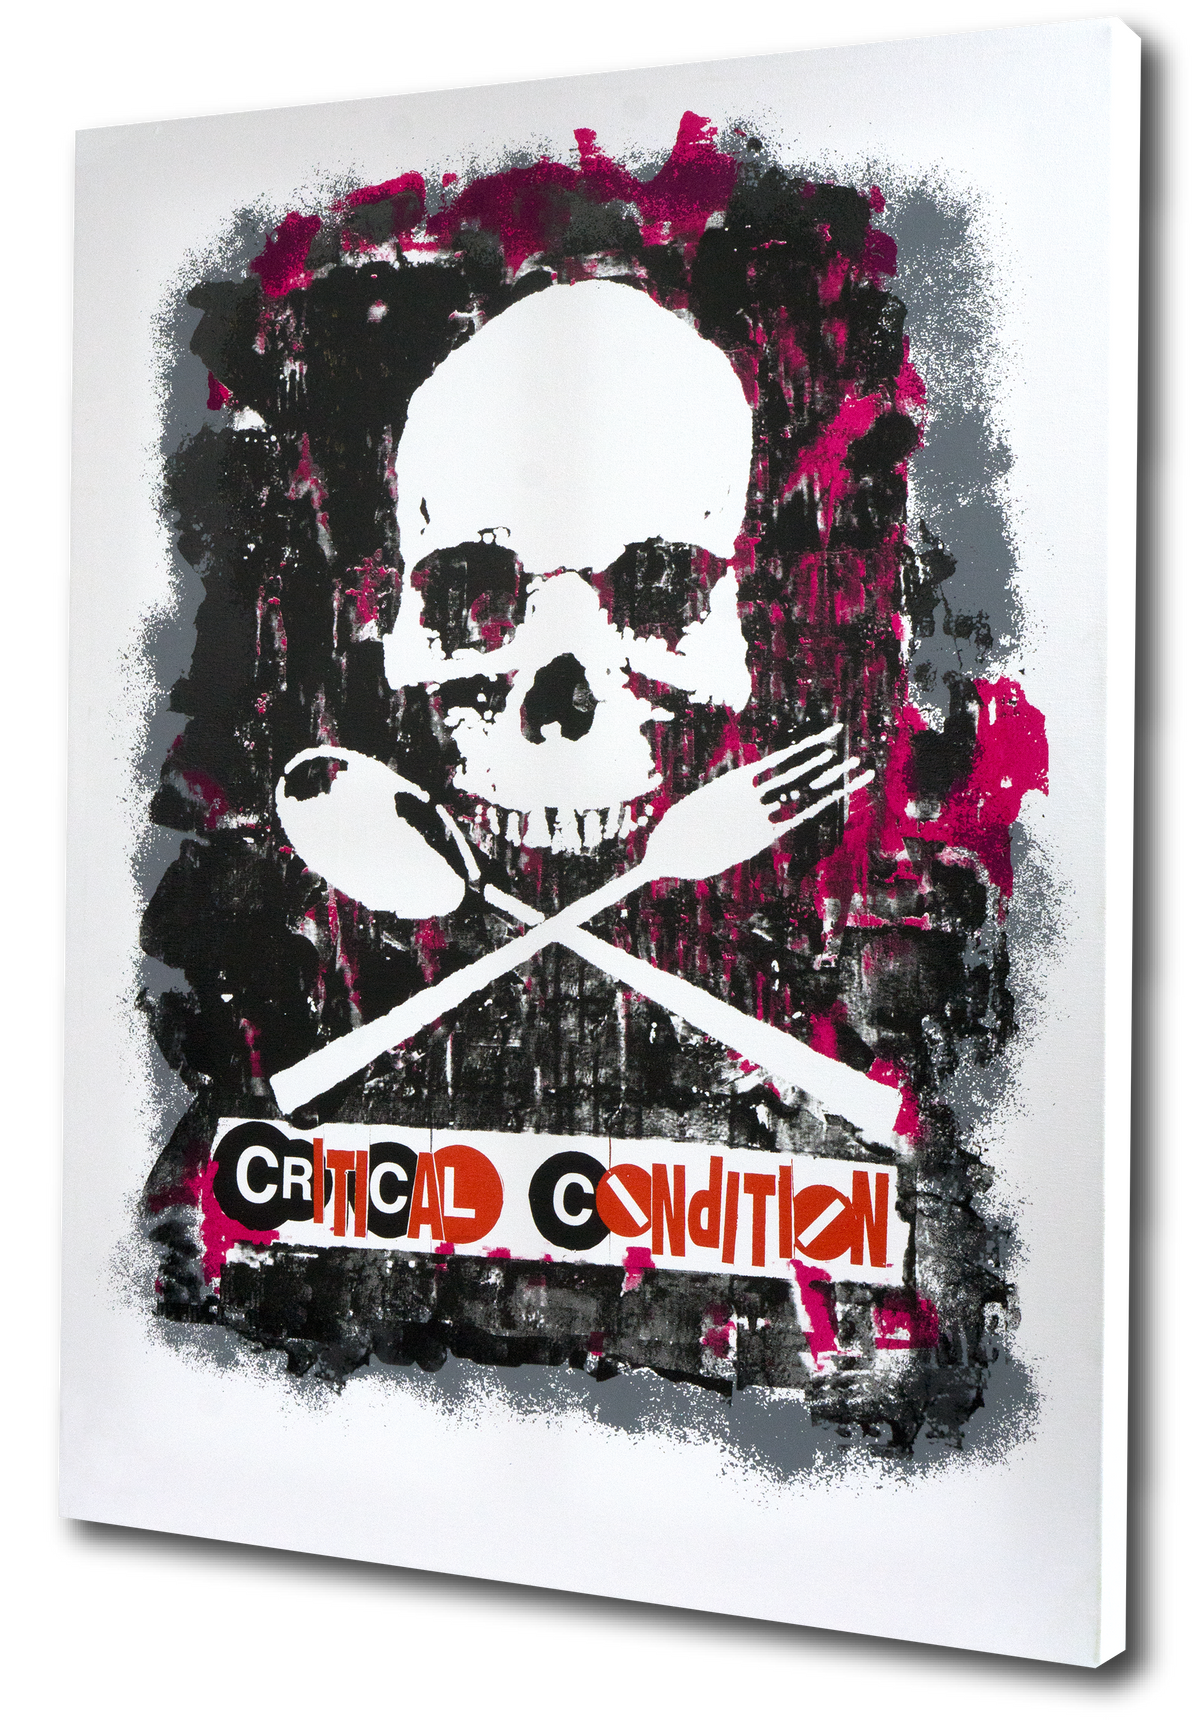 Al Diaz and Dave Navarro &quot;Critical Condition&quot; - 4 Color Screen Print On Canvas, 1 of 3 - 19 x 25&quot;